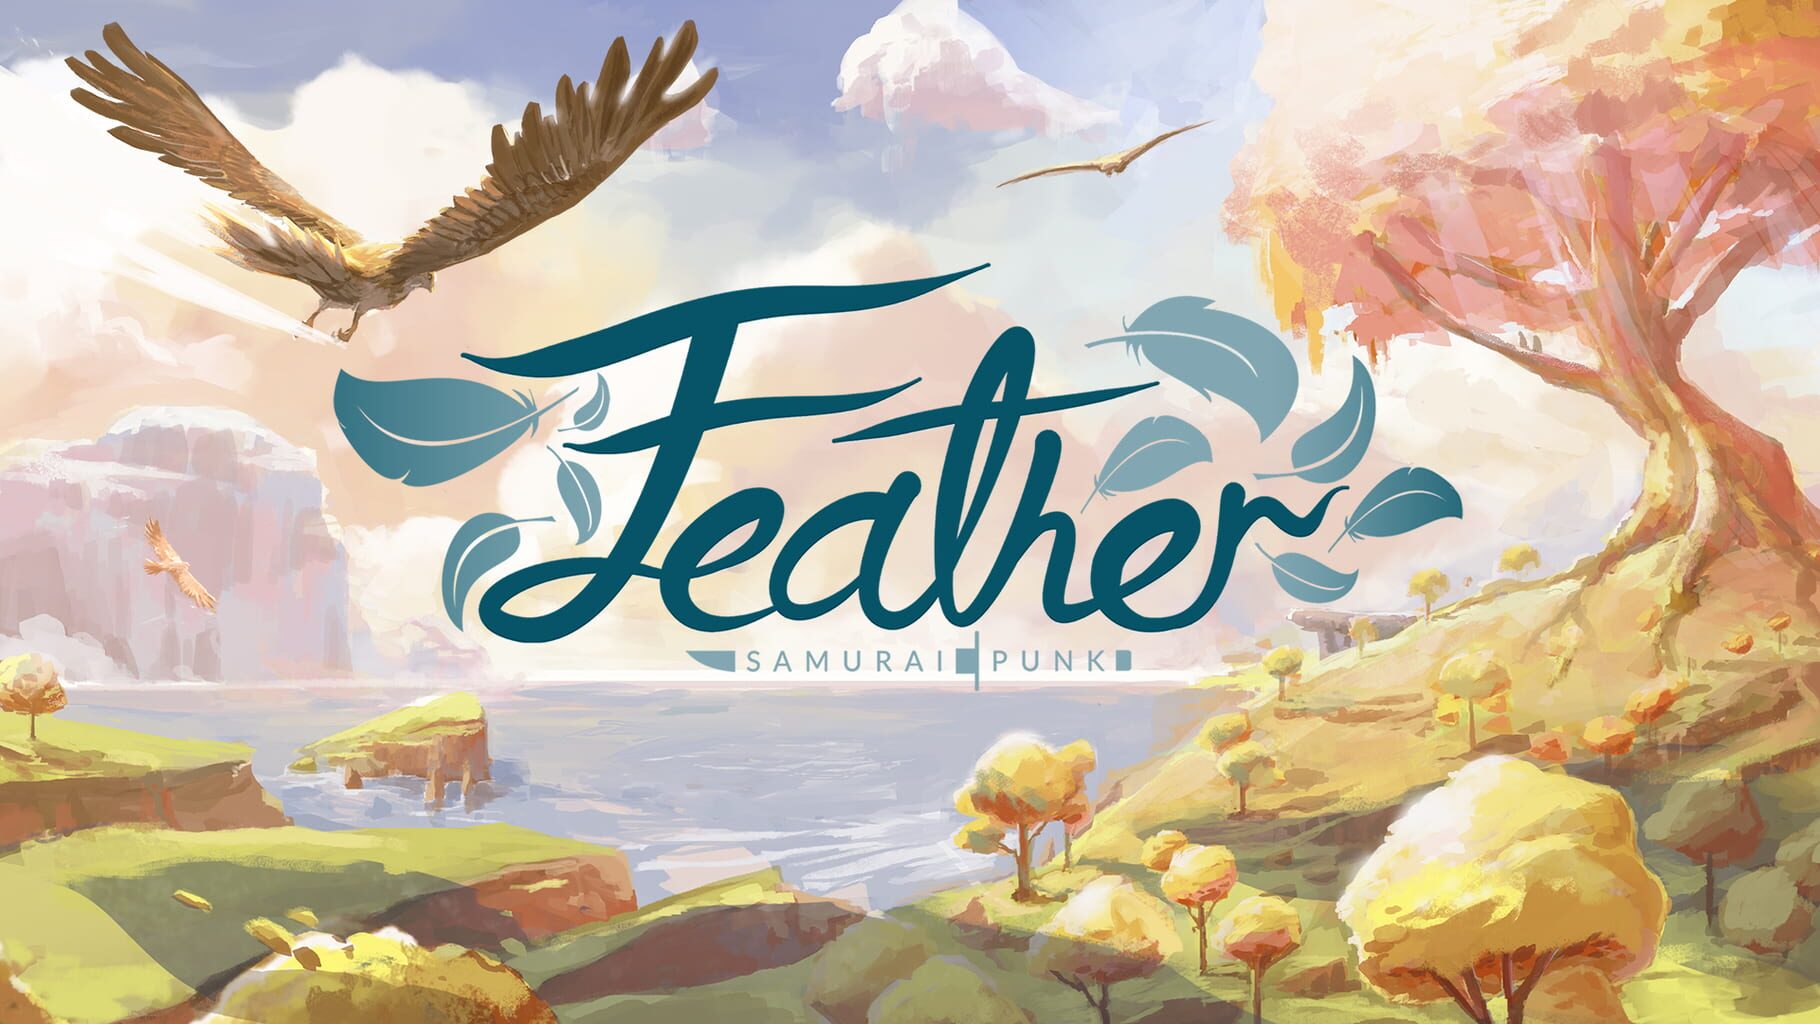 Feather artwork